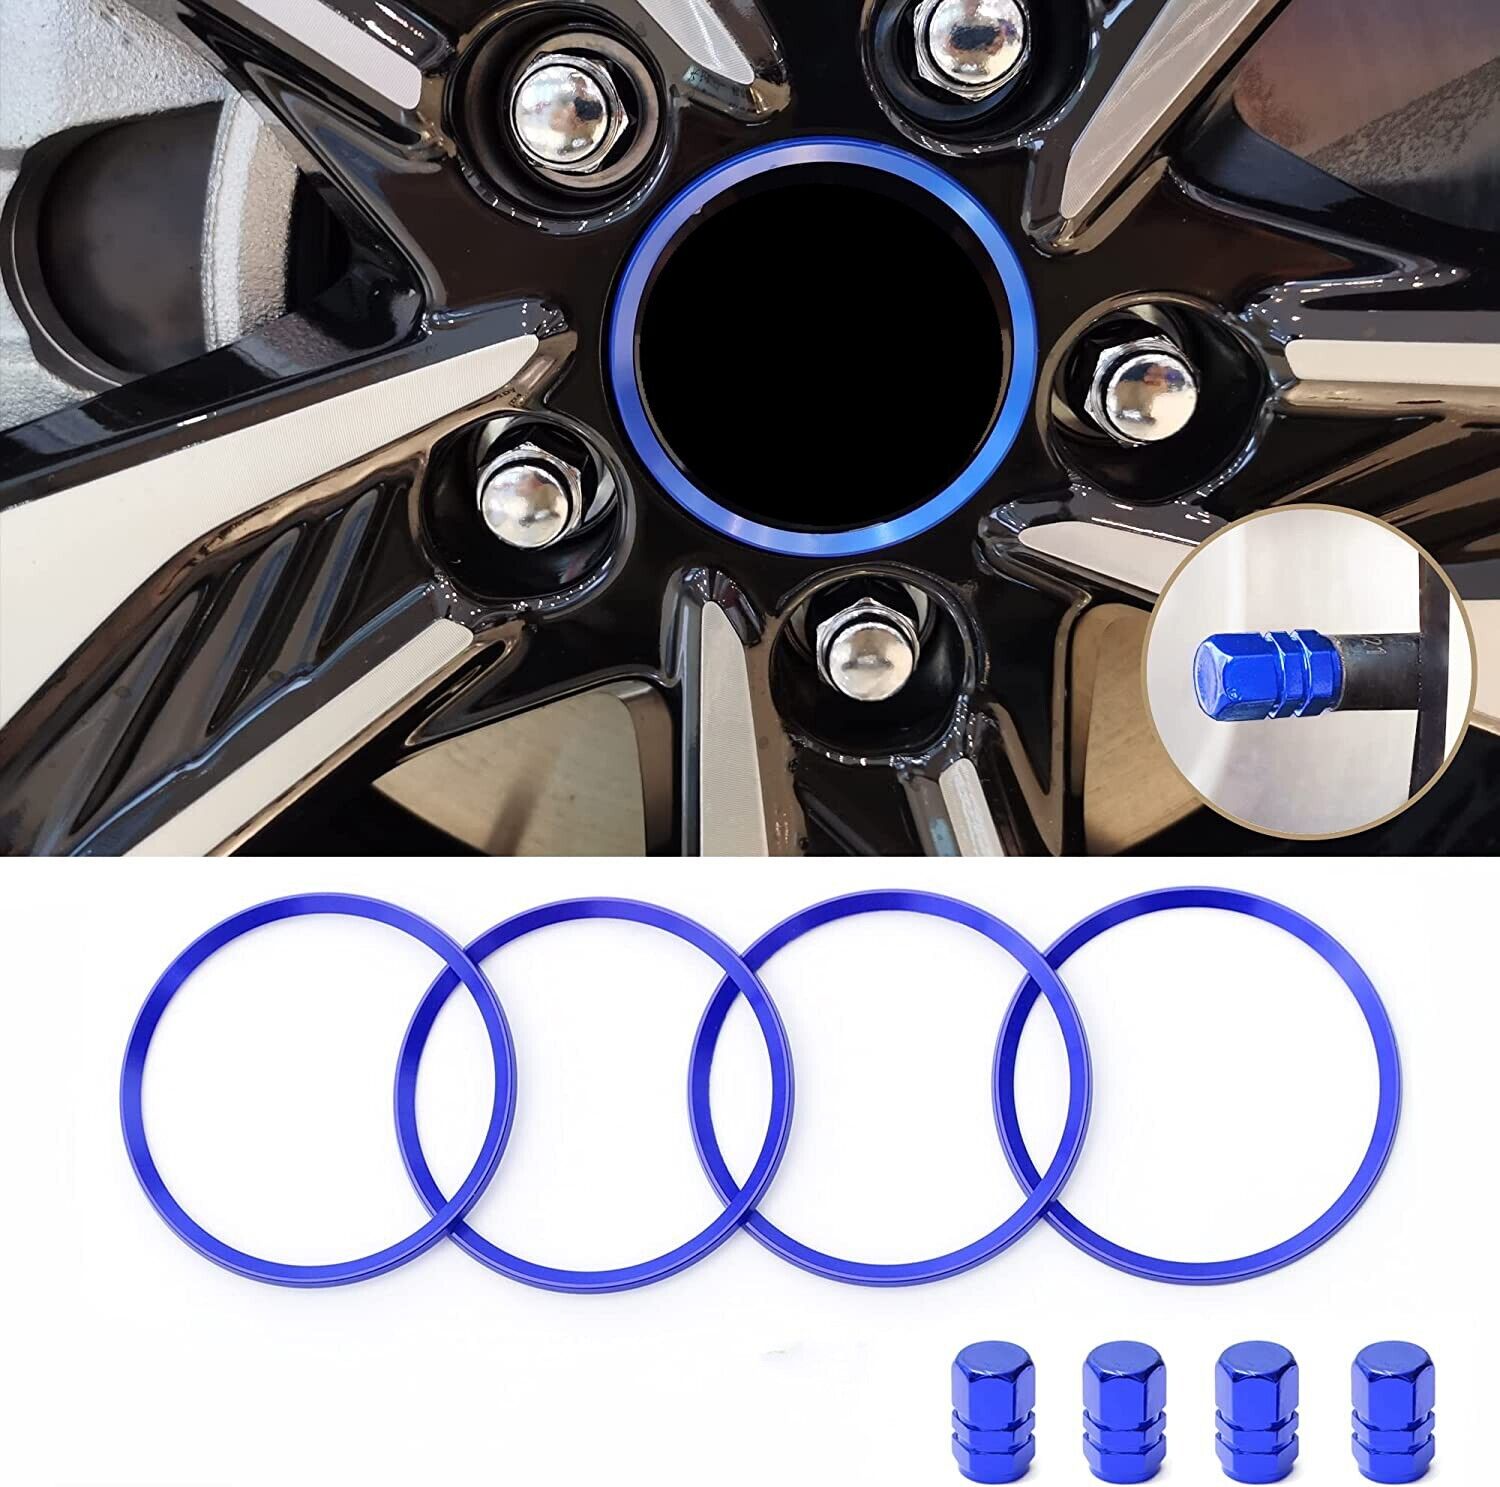 71mm Aluminum Blue Wheel Emblem Rings With Tire Cap Fits 16-22 Civic CRV Accord